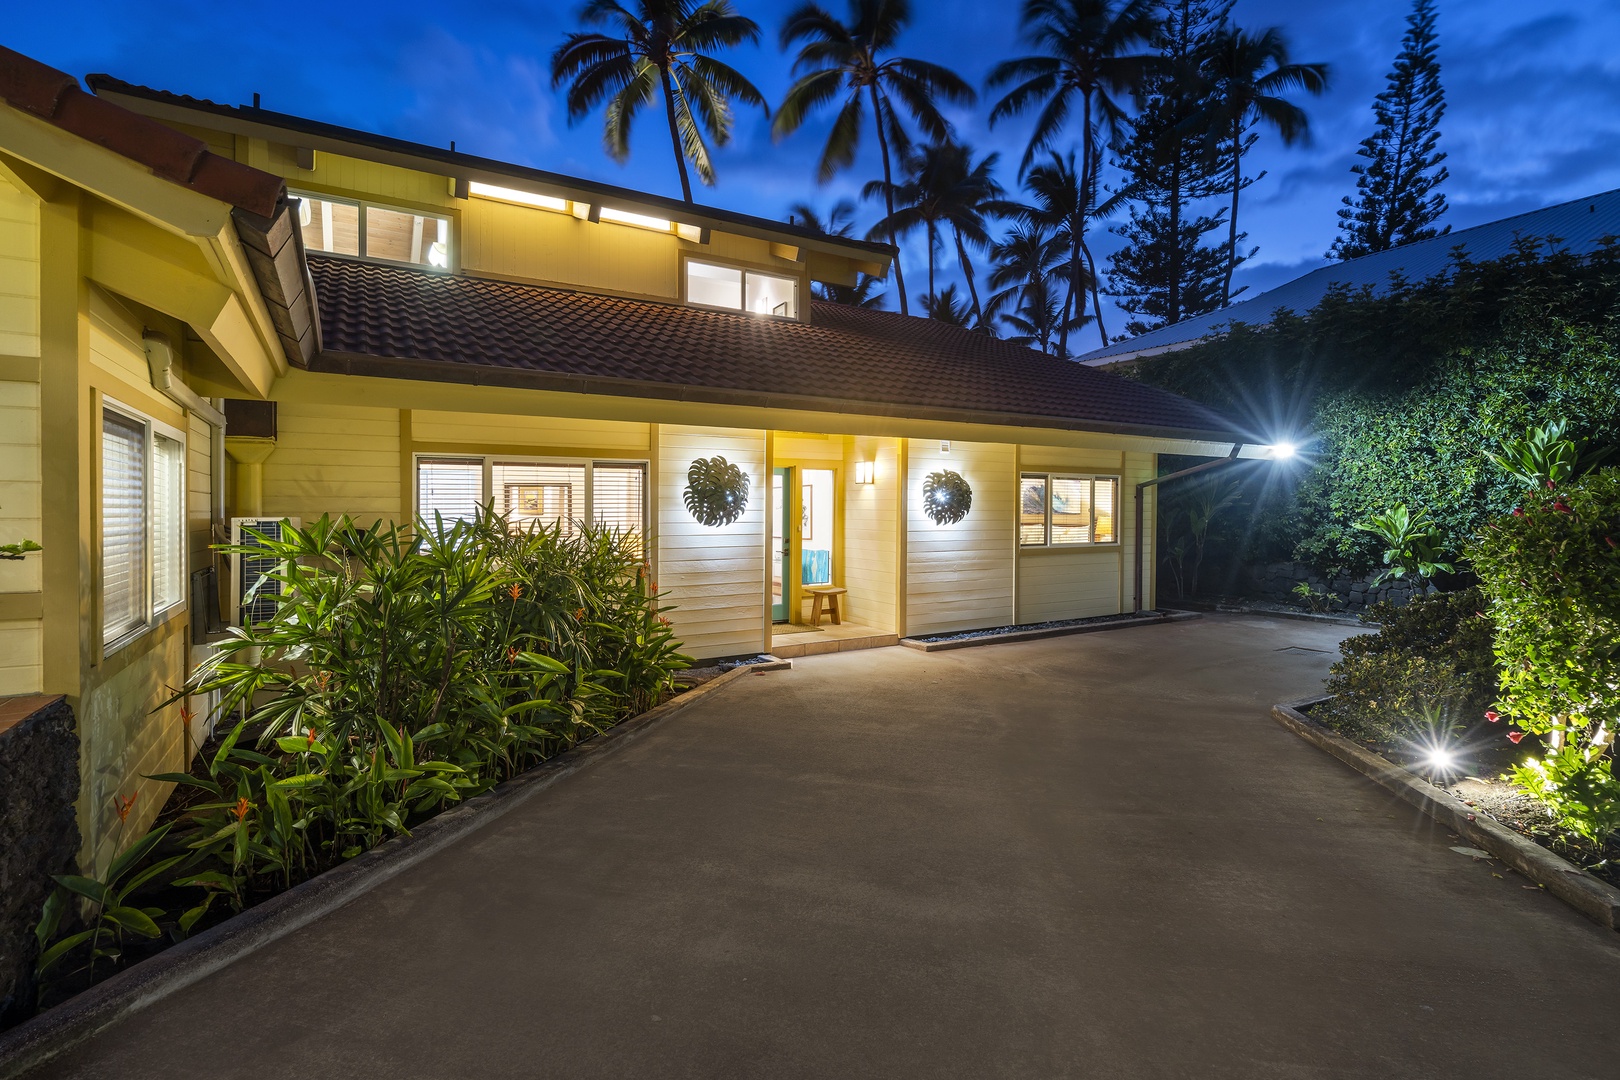 Kailua Kona Vacation Rentals, Hale Pua - Front of home at twilight